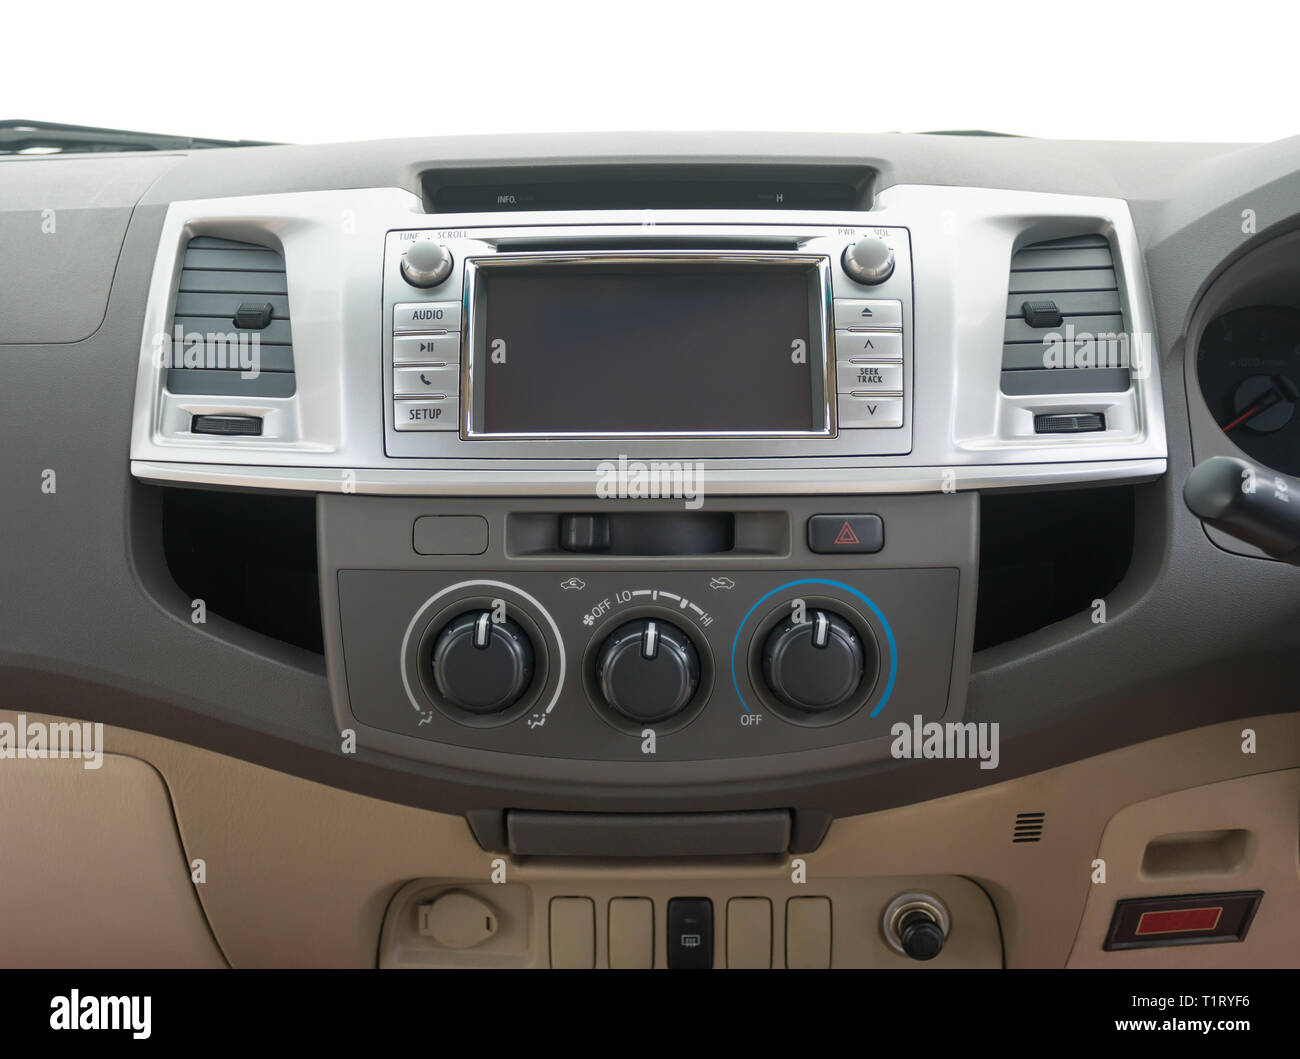 Toyota Vigo Champ 3000 Turbo Car Interior Console include Touch Screen Monitor Air Condition Car Cigarette Lighter Stereo. Toyota Vigo Champ 3000 Turb Stock Photo